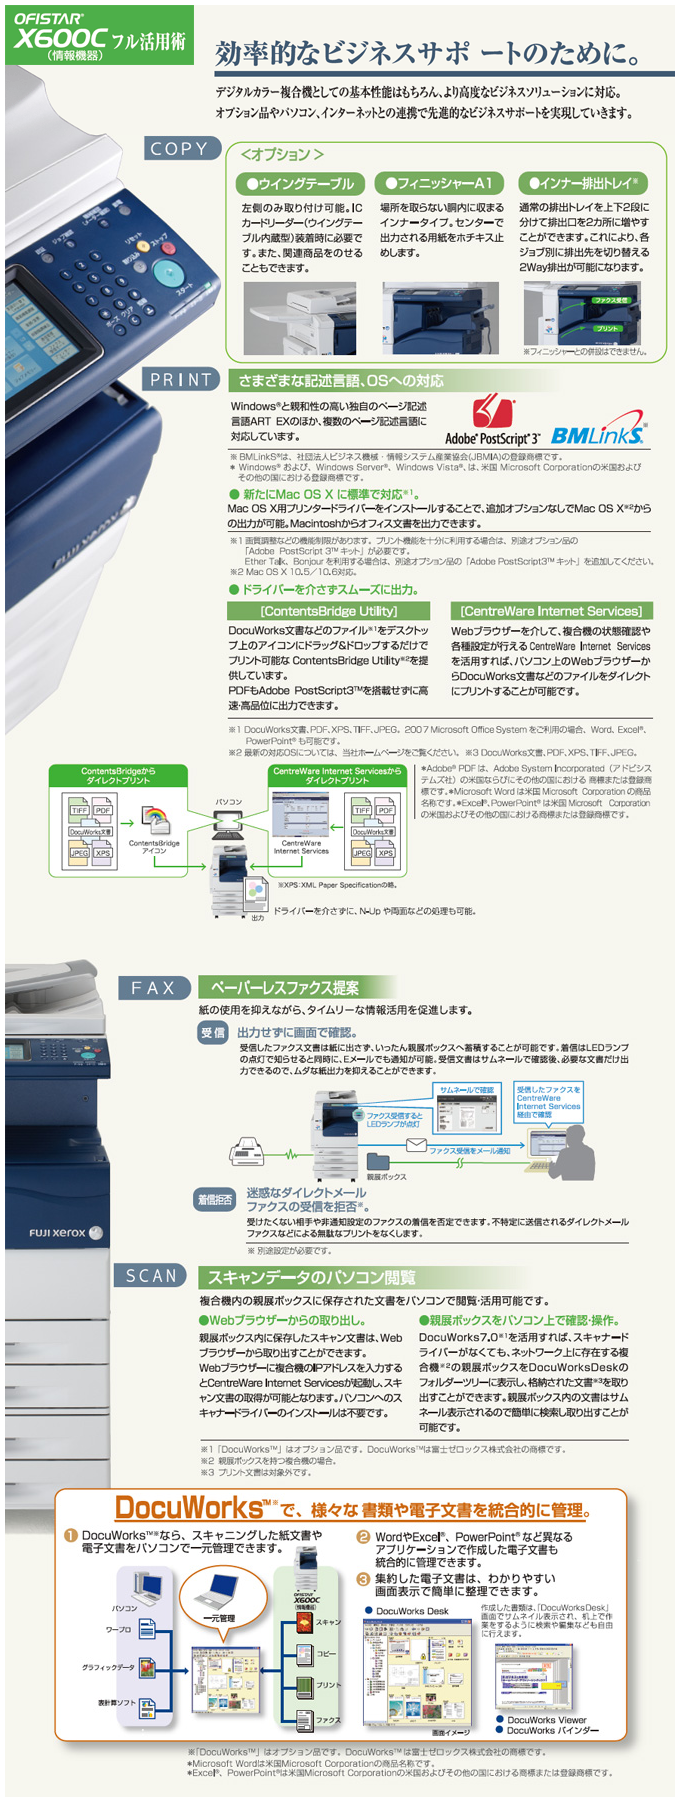 Ntt西日本 Ofistar X600c 情報機器 の基本情報 価格 法人 企業向けictサービス